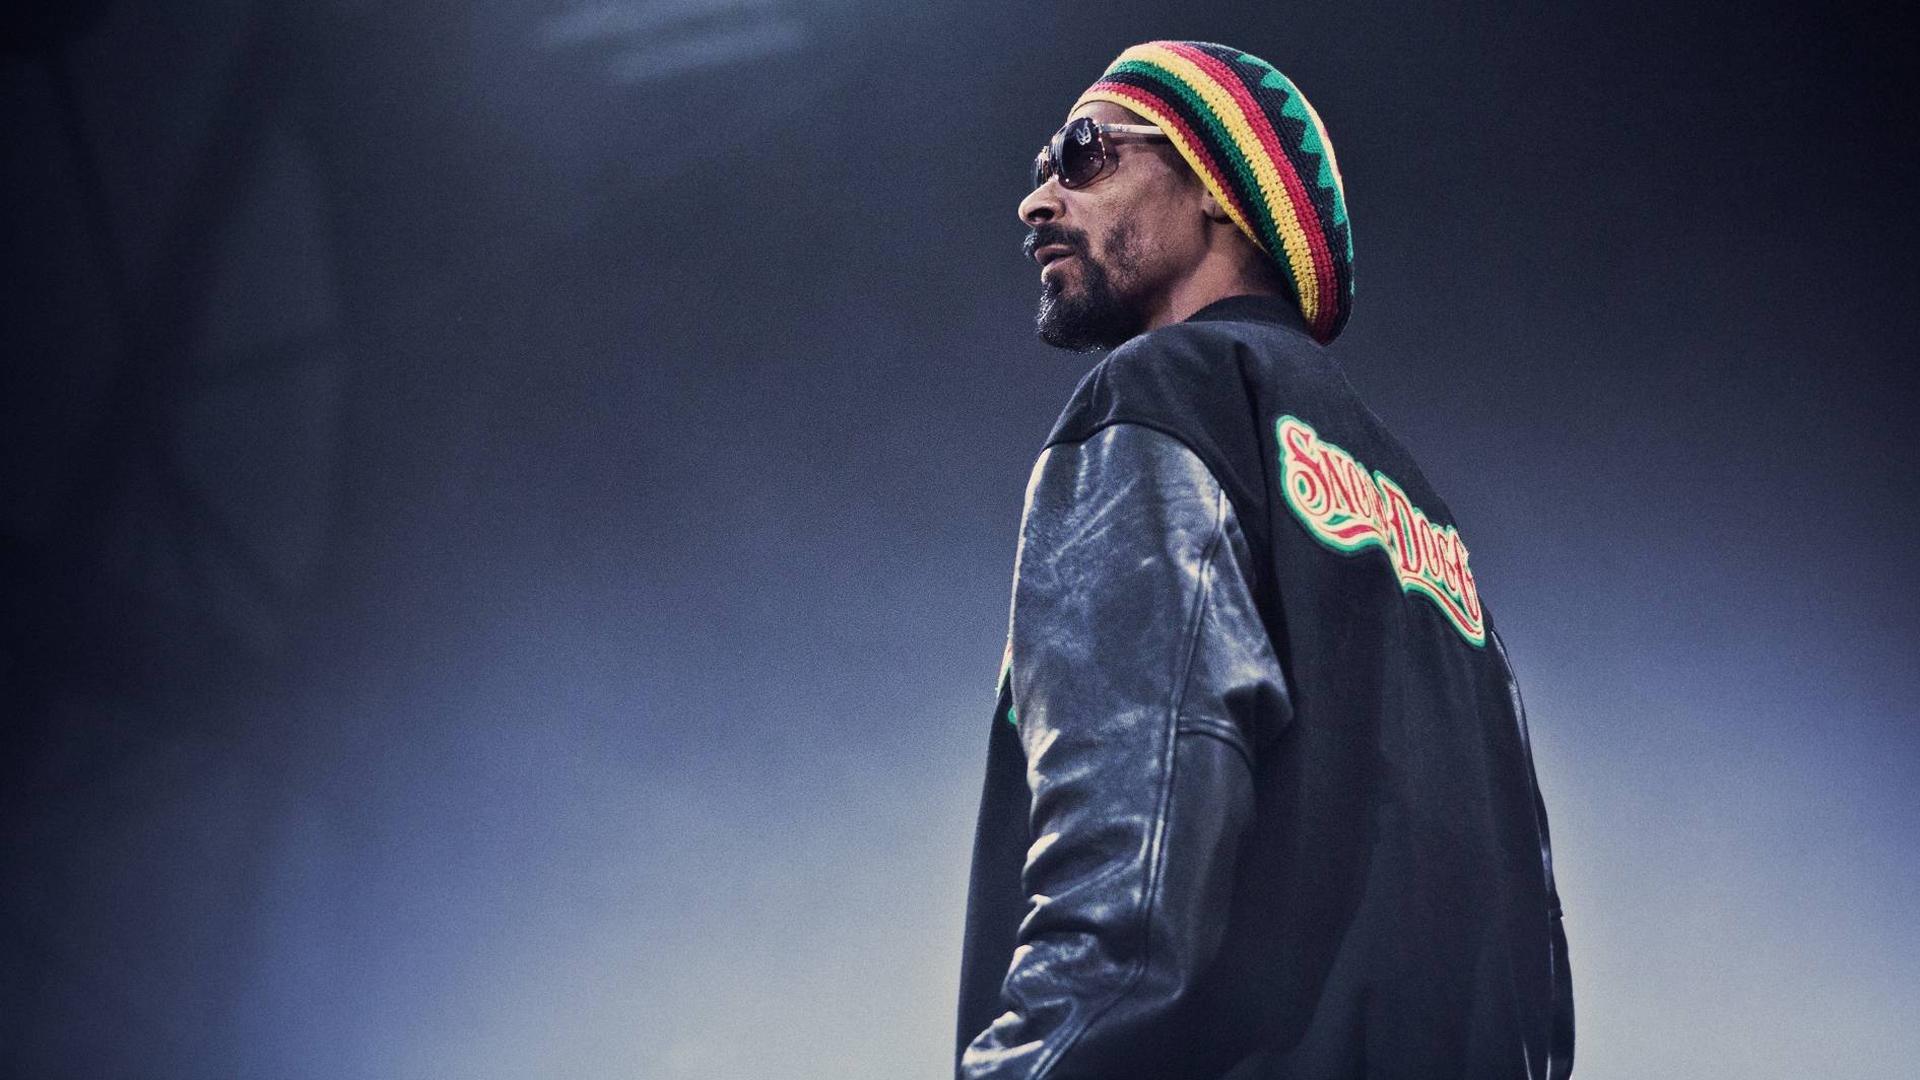 Snoop Dogg Photo